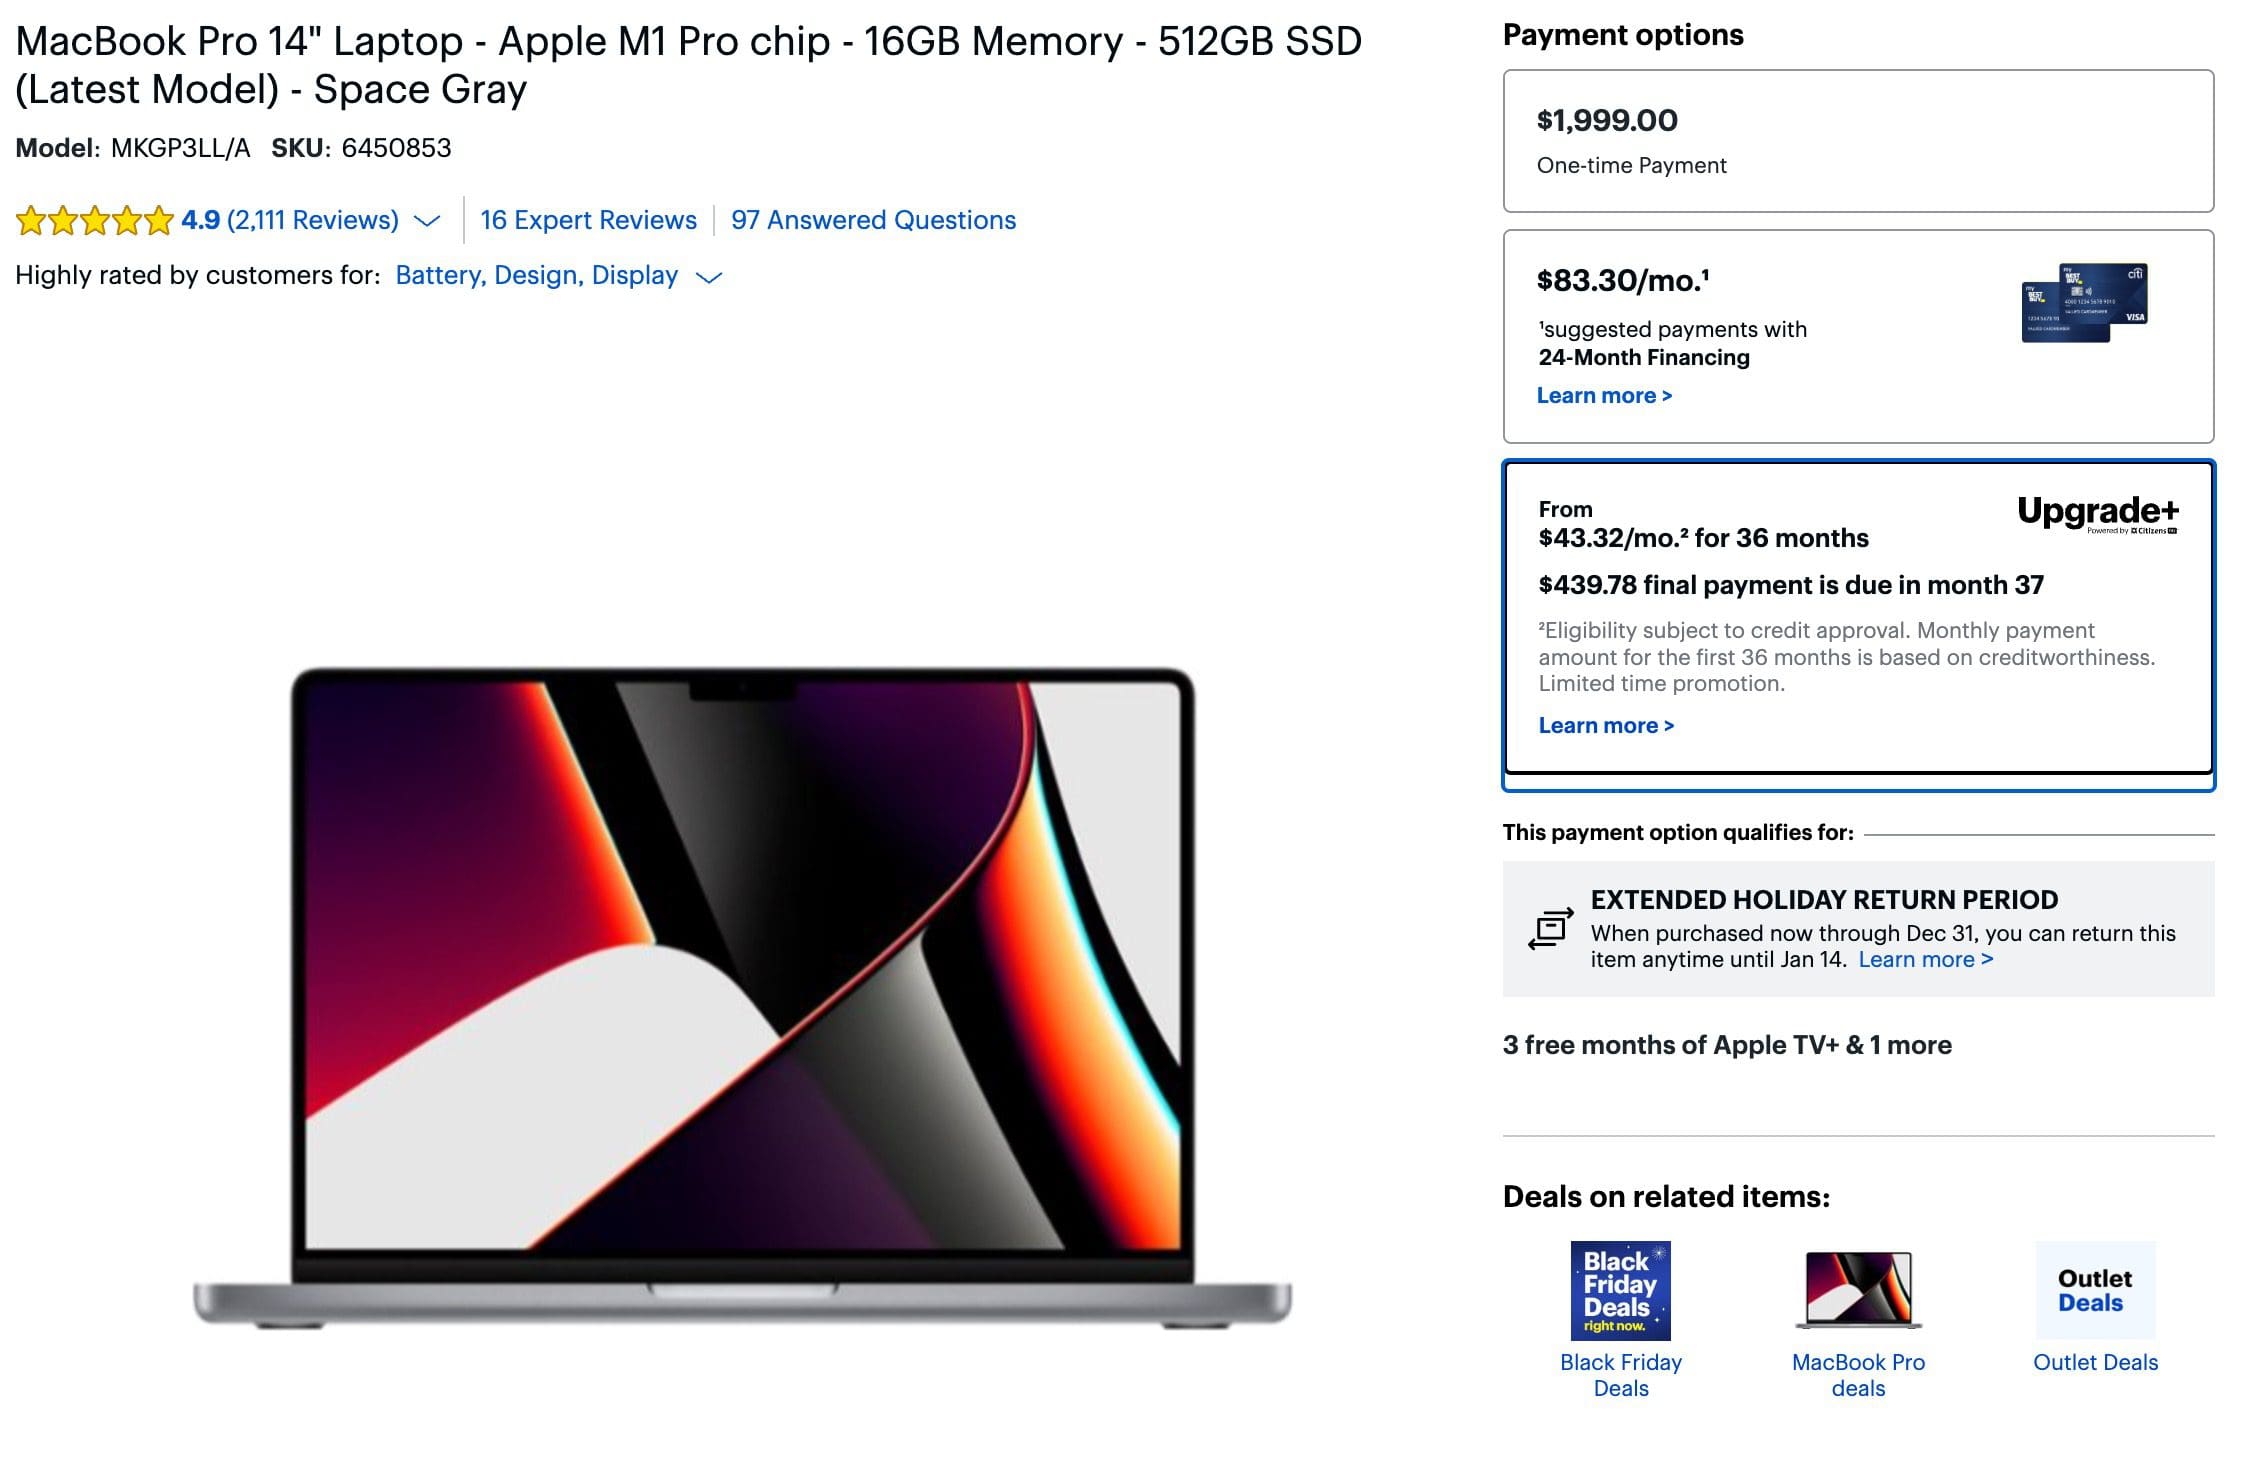 How to Get a New MacBook With Best Buy's Upgrade+ Program - 1